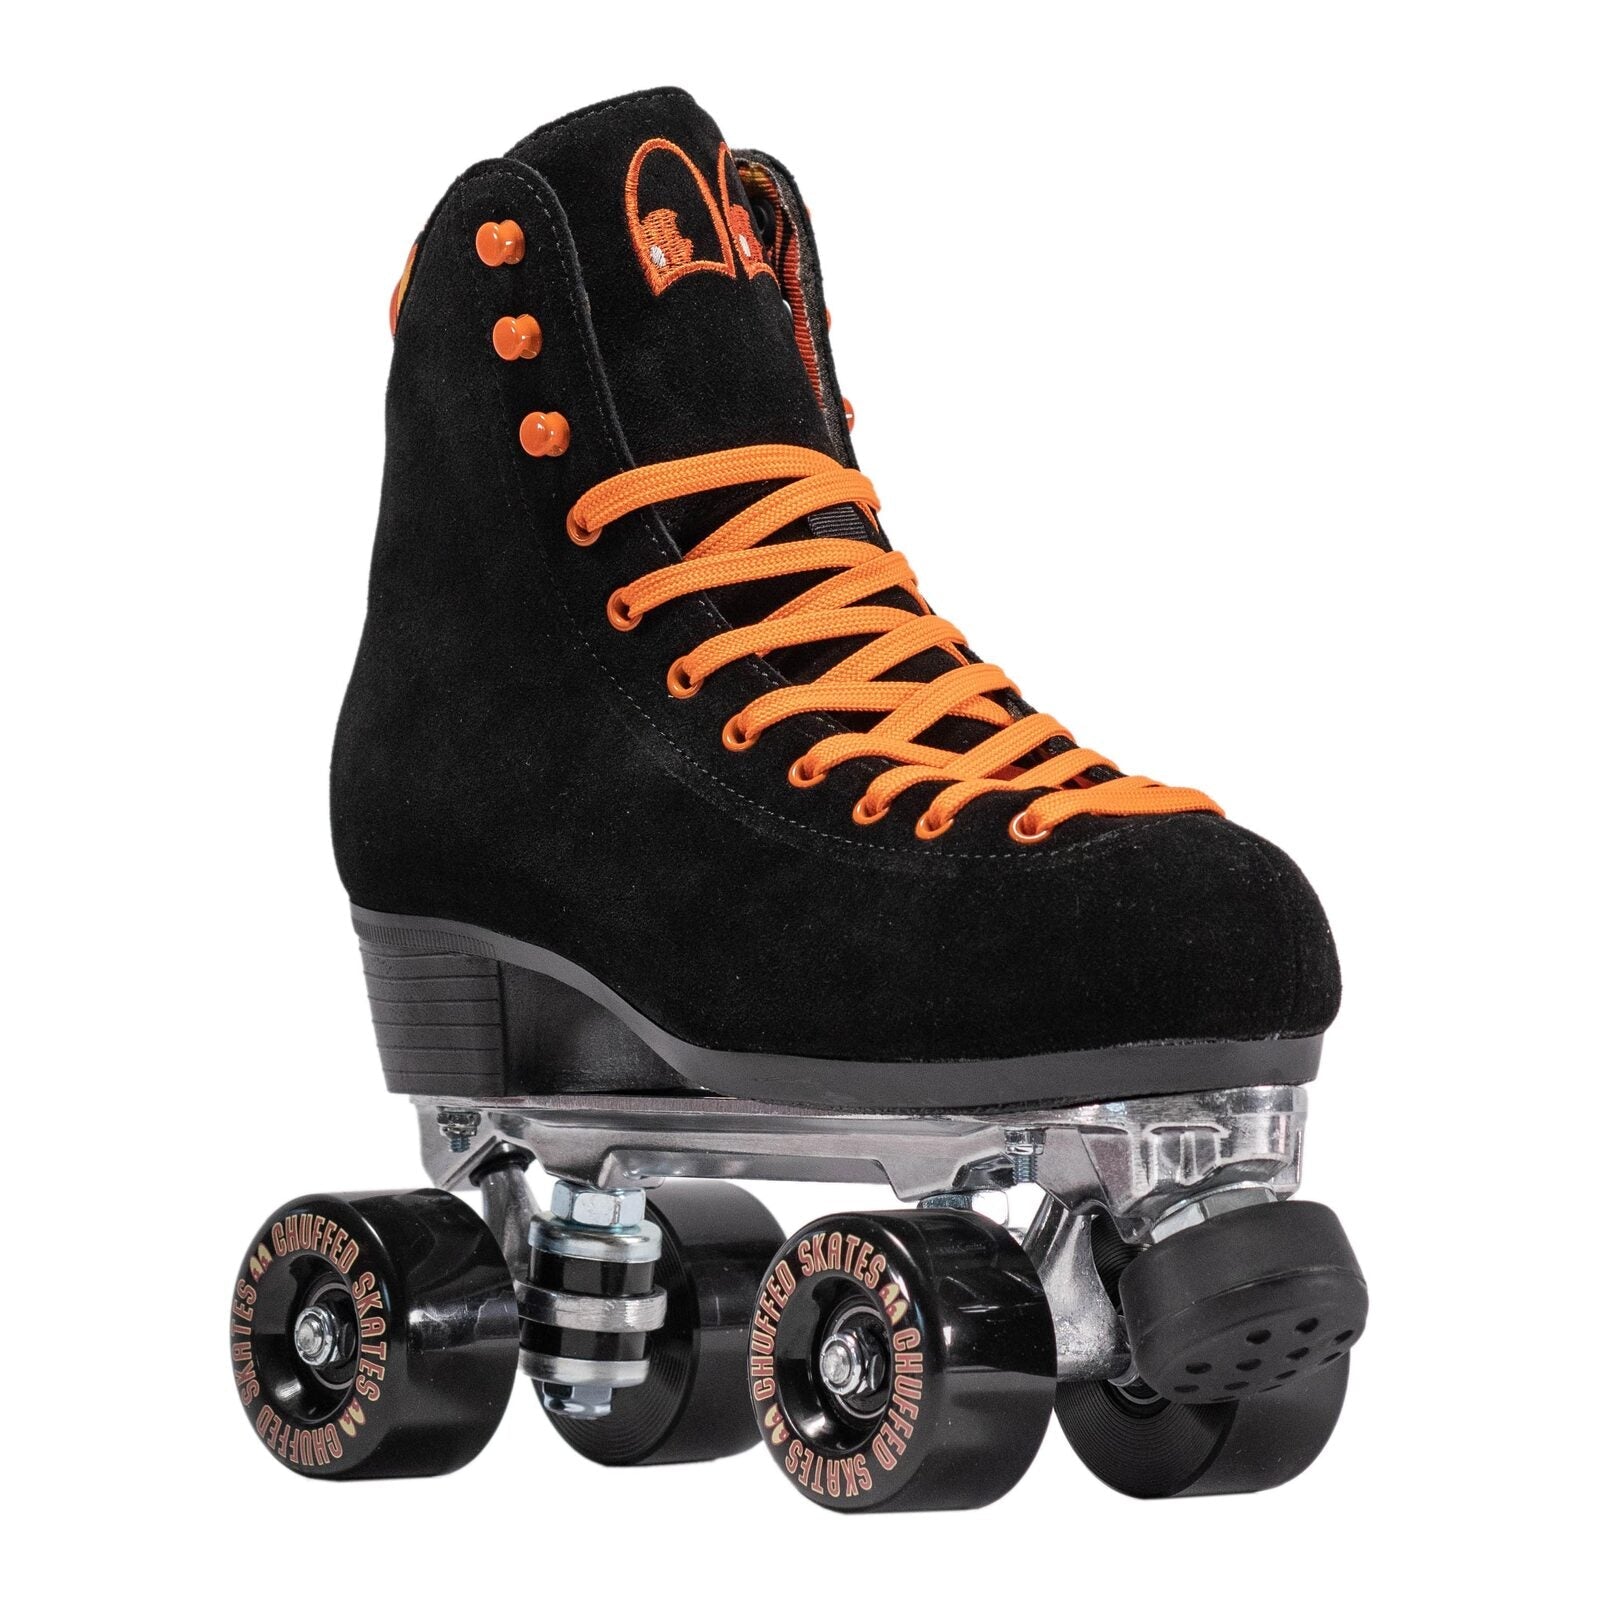 Chuffed Skates black roller skates 